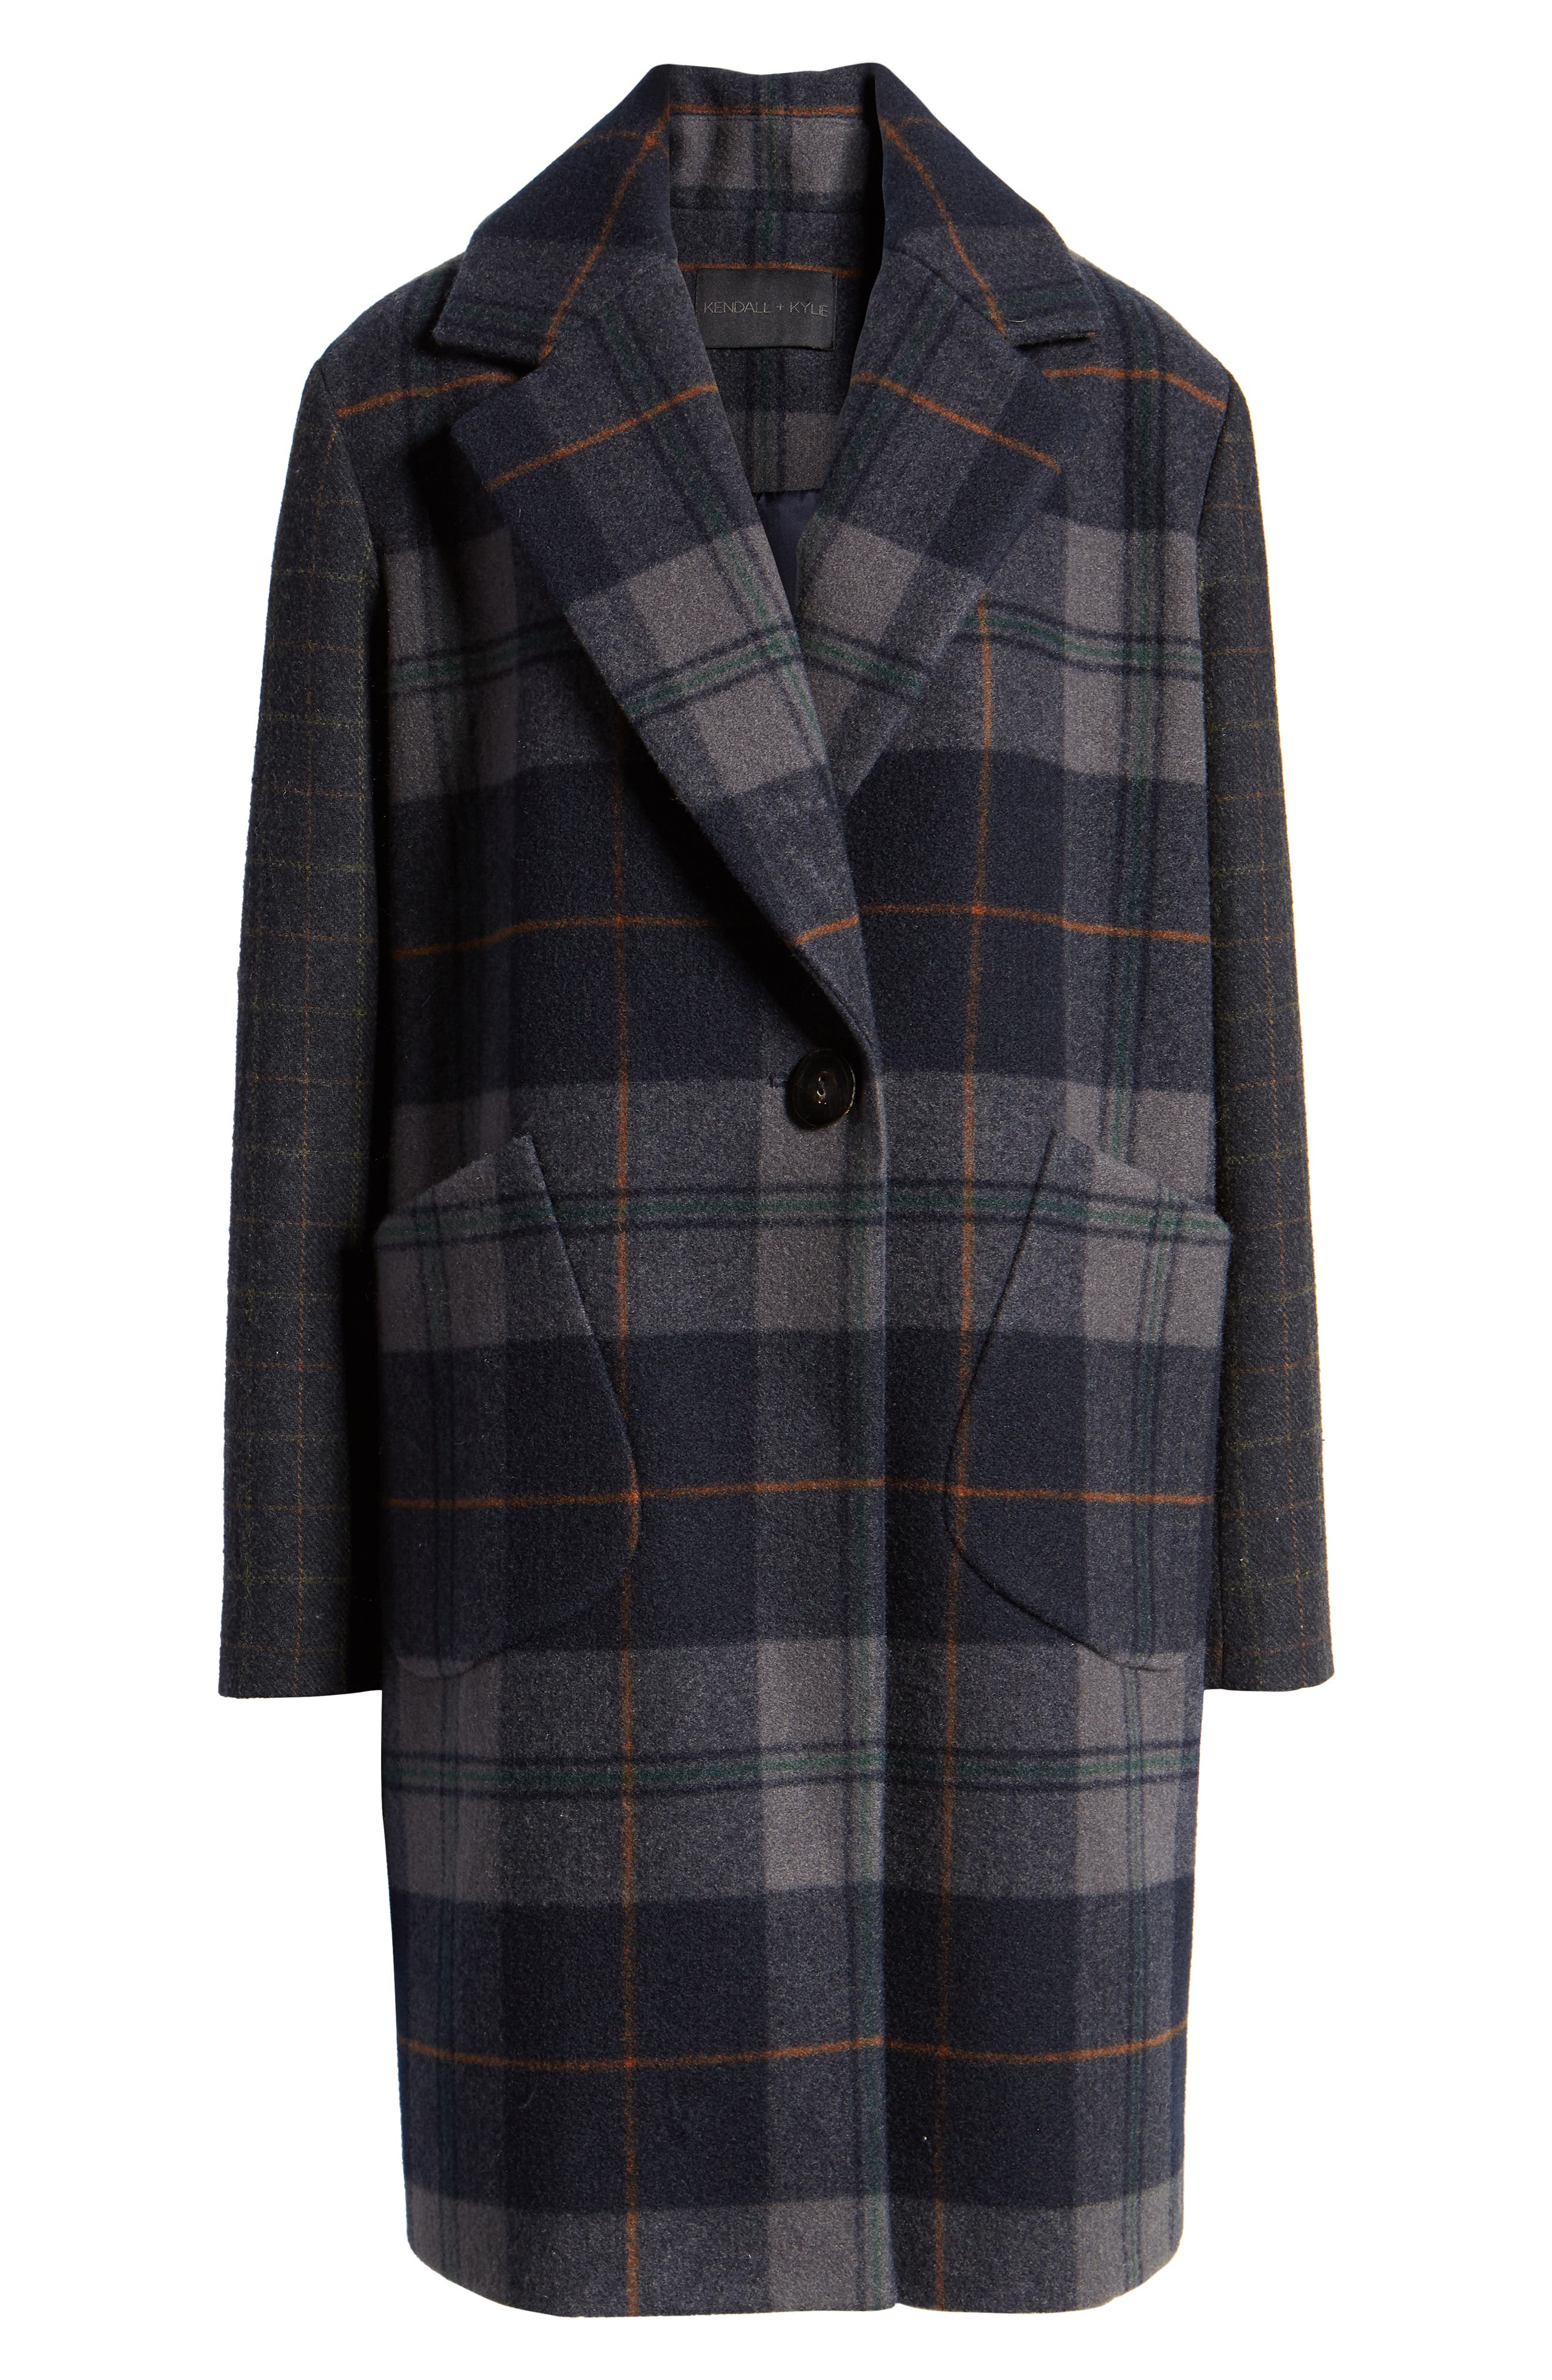 1920s Coats, Furs, Jackets and Capes History